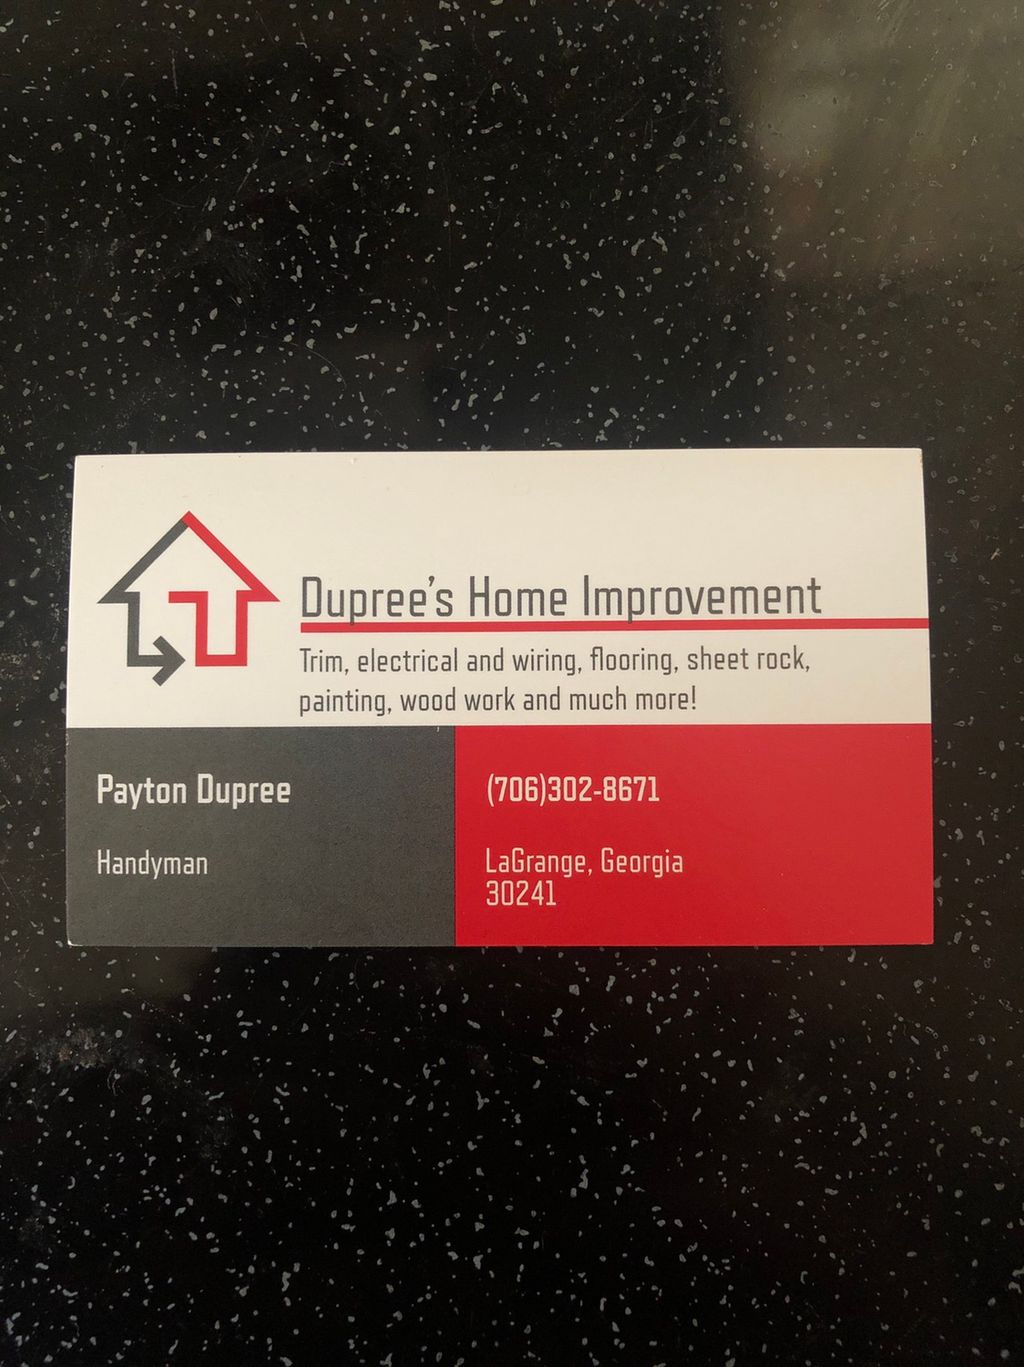 Dupree’s Home Improvement